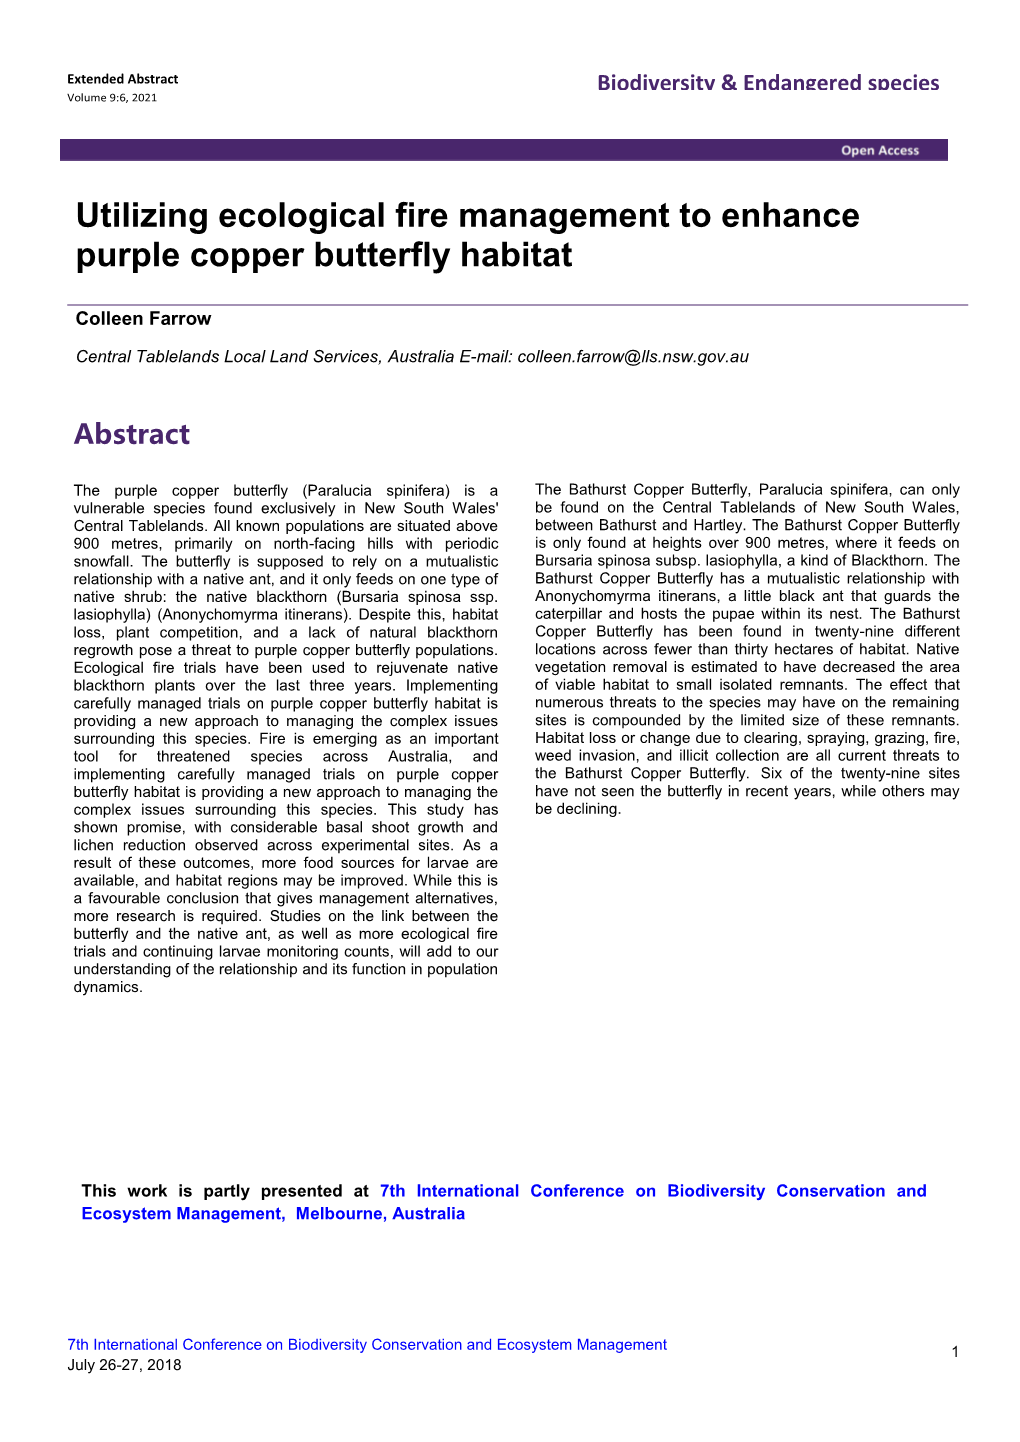 Utilizing Ecological Fire Management to Enhance Purple Copper Butterfly Habitat